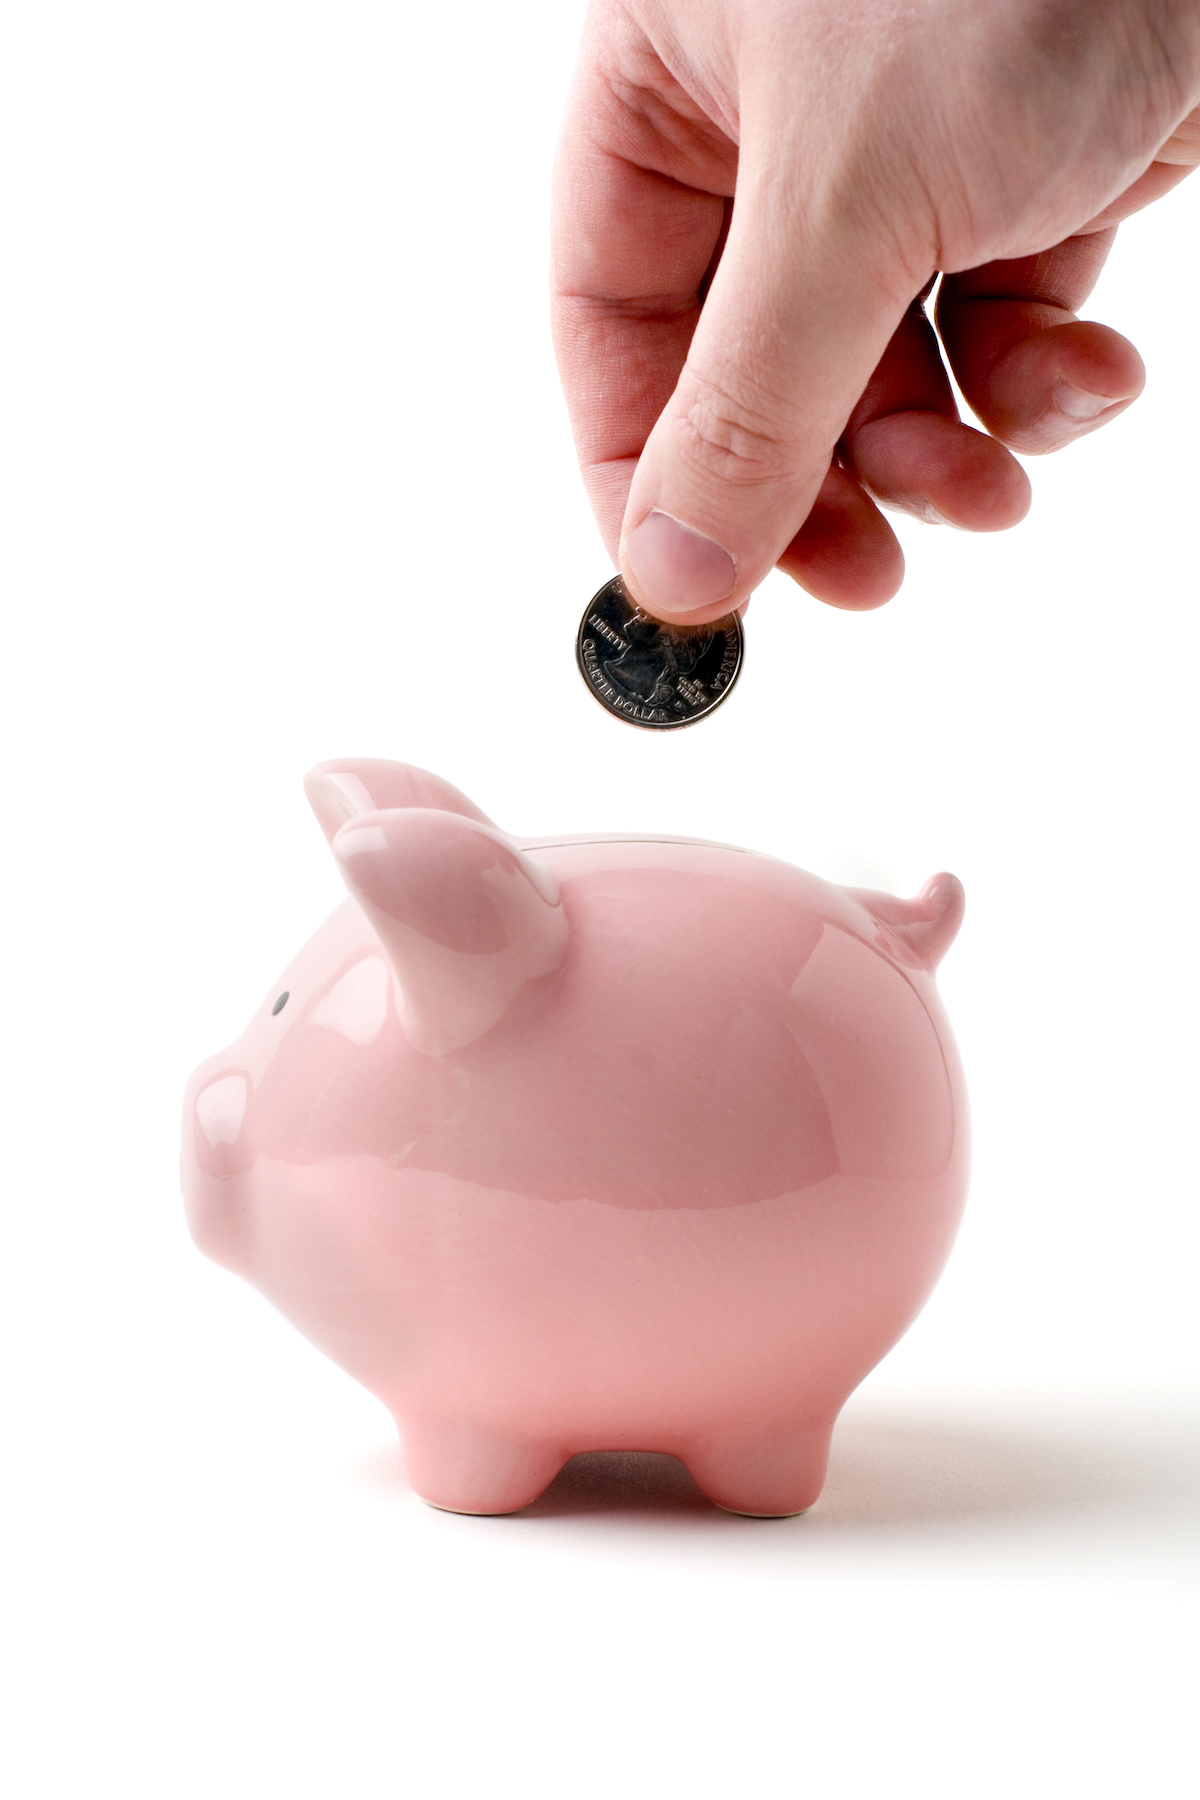 5 Simple Ways to increase loan repayments